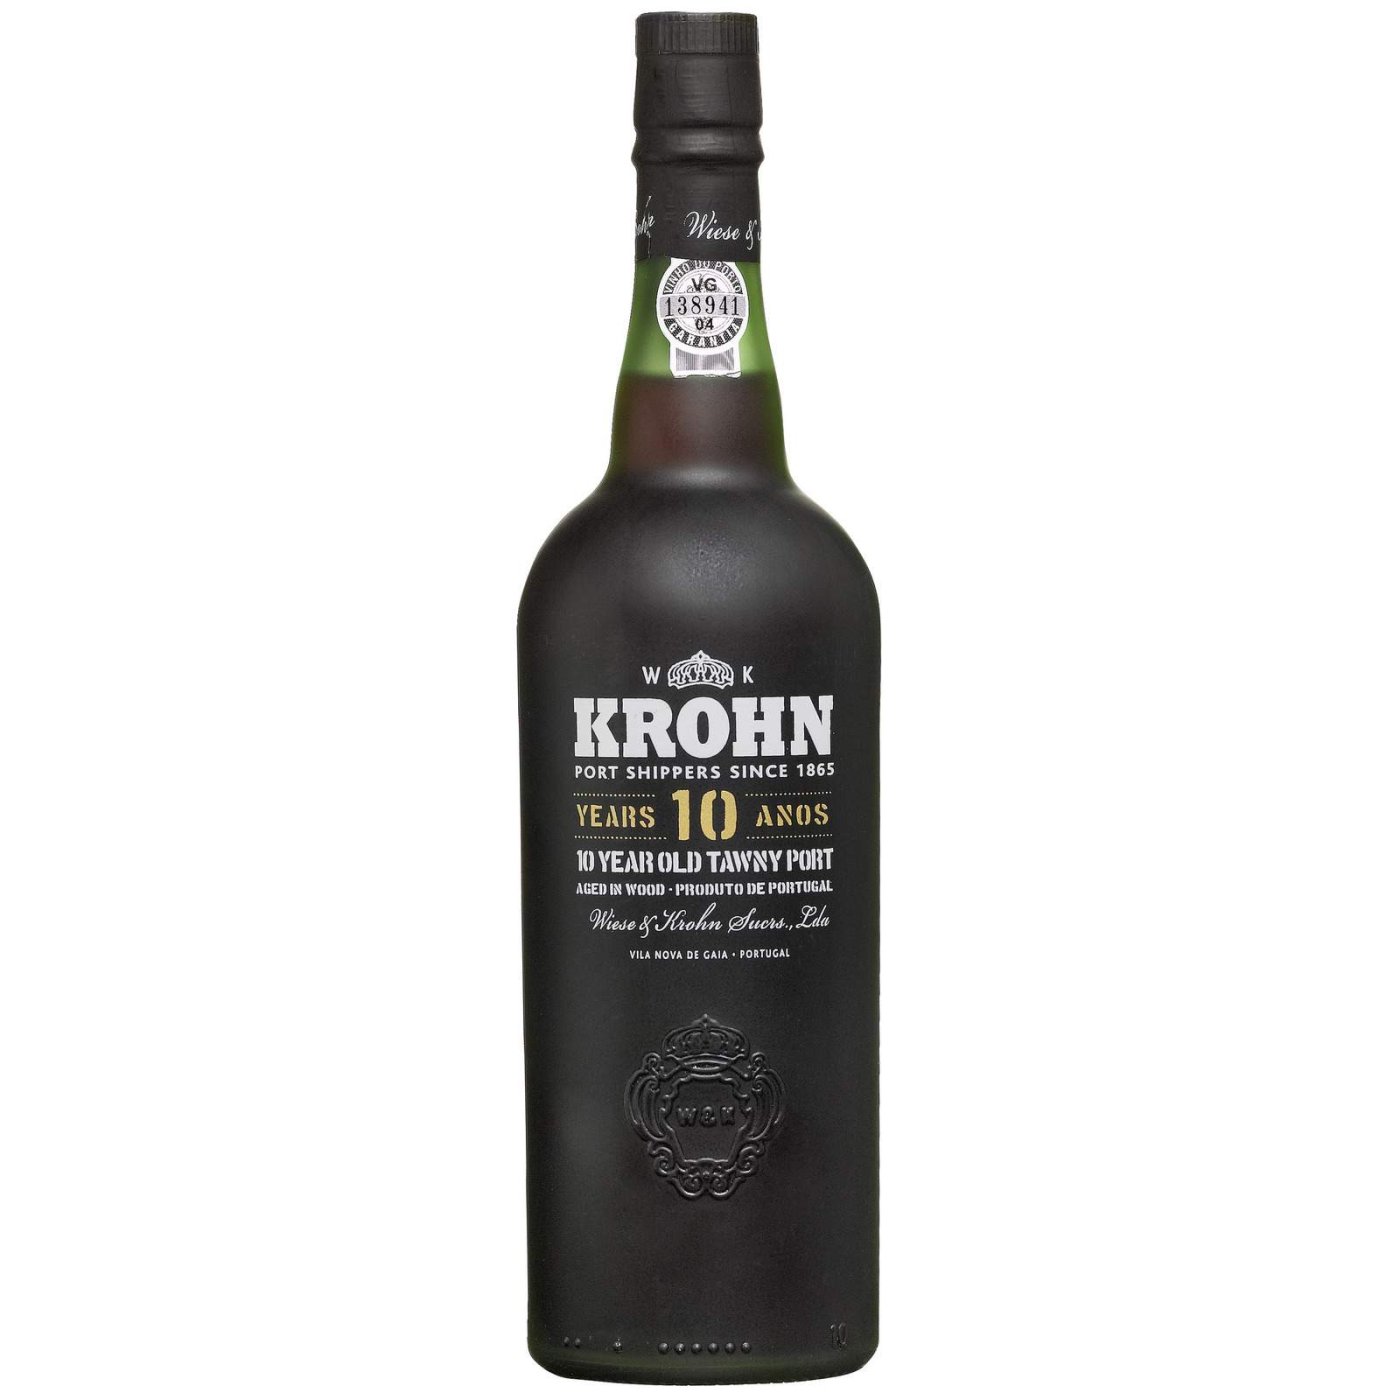 Krohn, 10 years 75cl